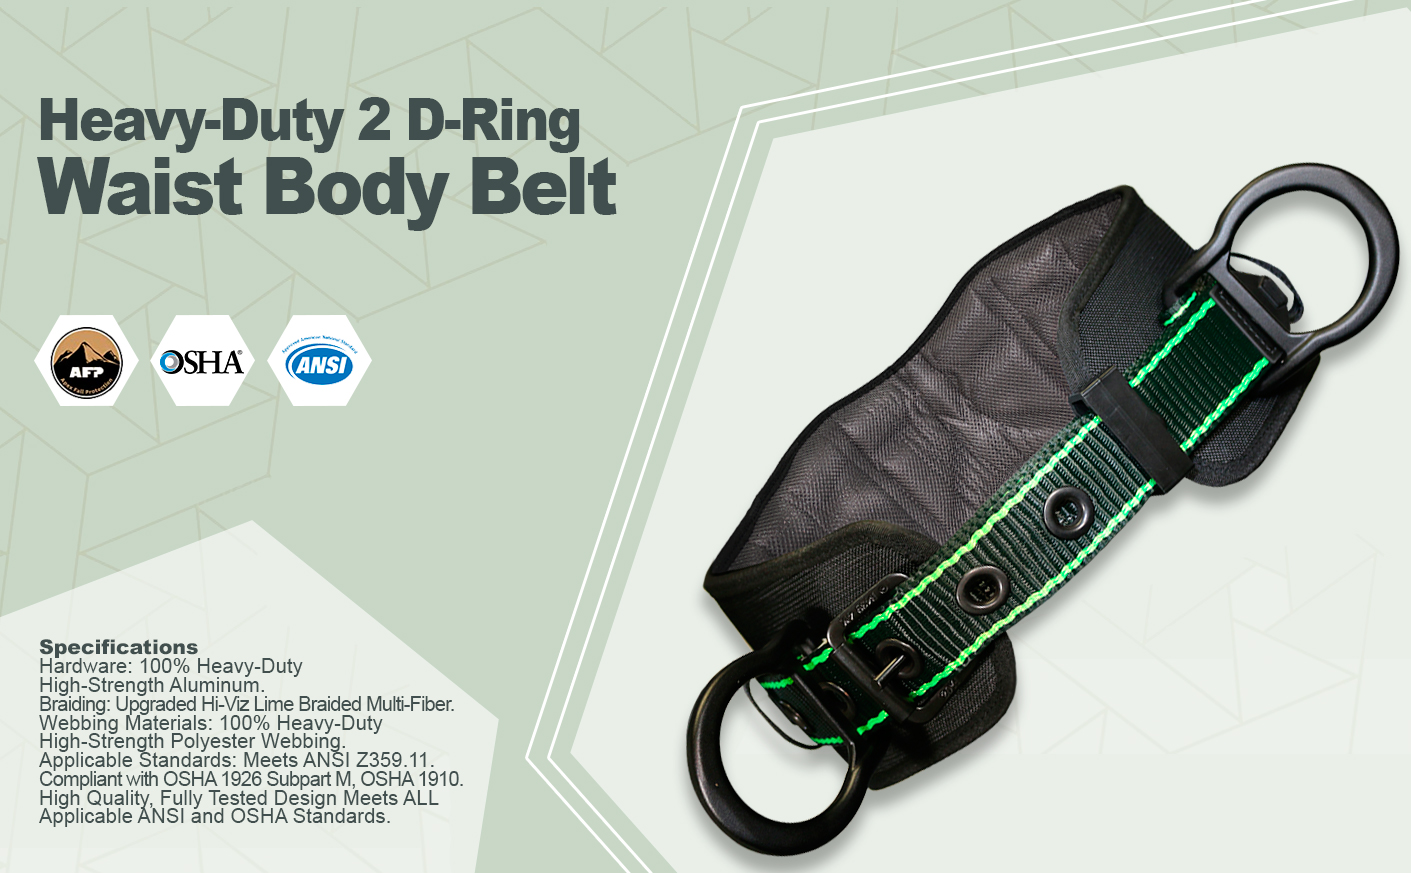 AFP Heavy-Duty 2 D-Ring Aluminum Hardware, Premium Thick 8’’ Padded Back Support Waist Body Belt w/ Tongue Buckle & Hi-Viz Premium Stitching, Fall Protection Work Positioning Restraint (OSHA/ANSI PPE). 